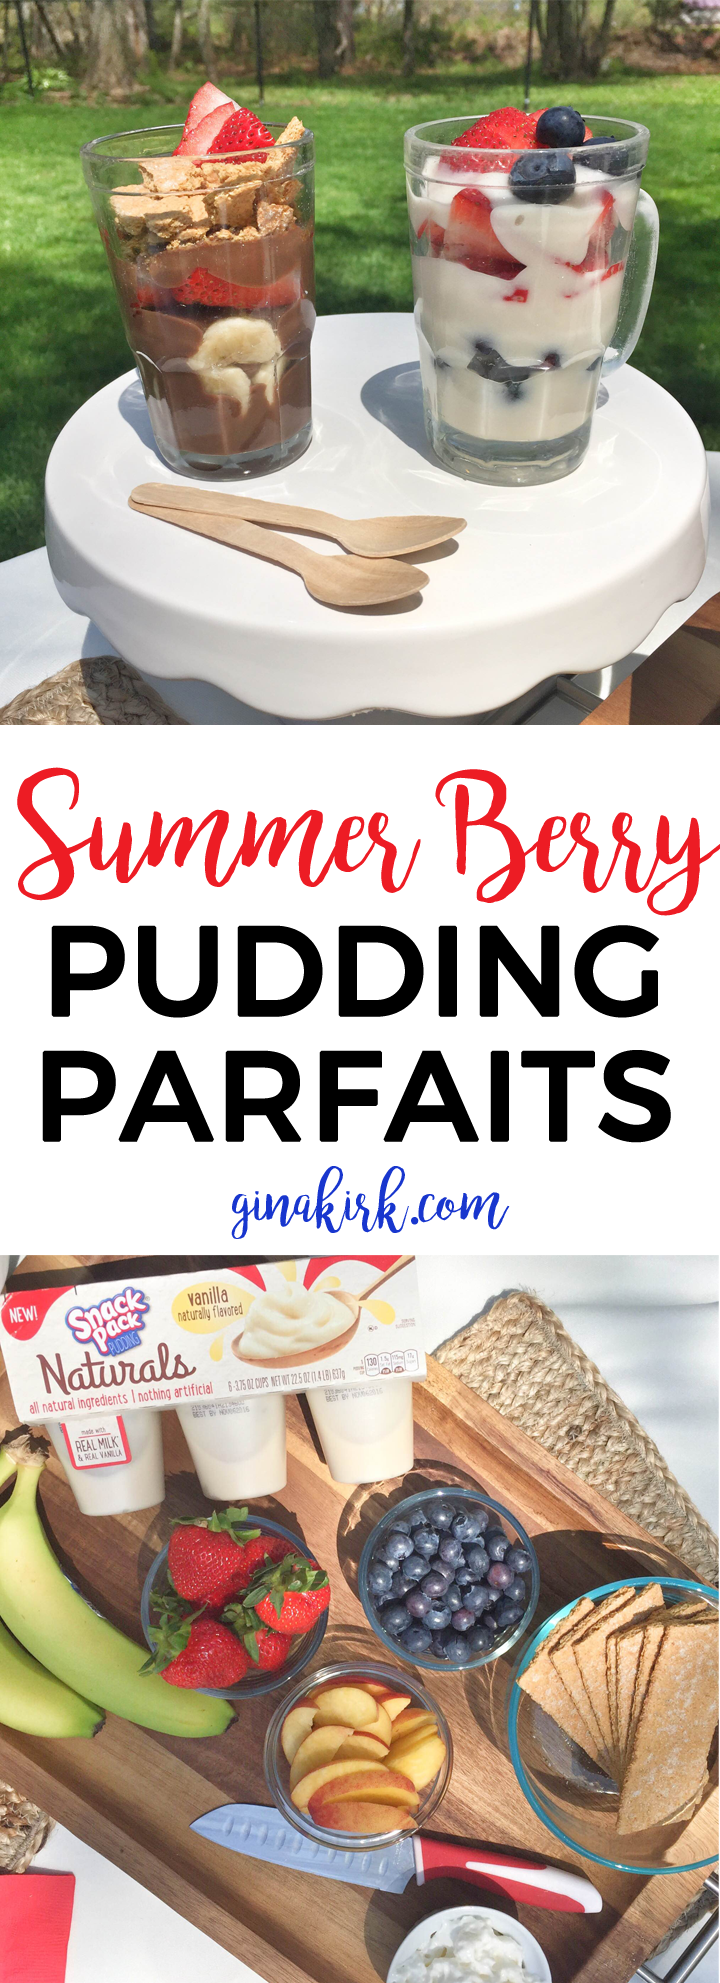 Summer Berry Pudding Parfaits - How to make pudding parfaits with snack pack naturals | Chocolate and vanilla pudding parfait recipe #SnackPackNaturals #ad GinaKirk.com @ginaekirk